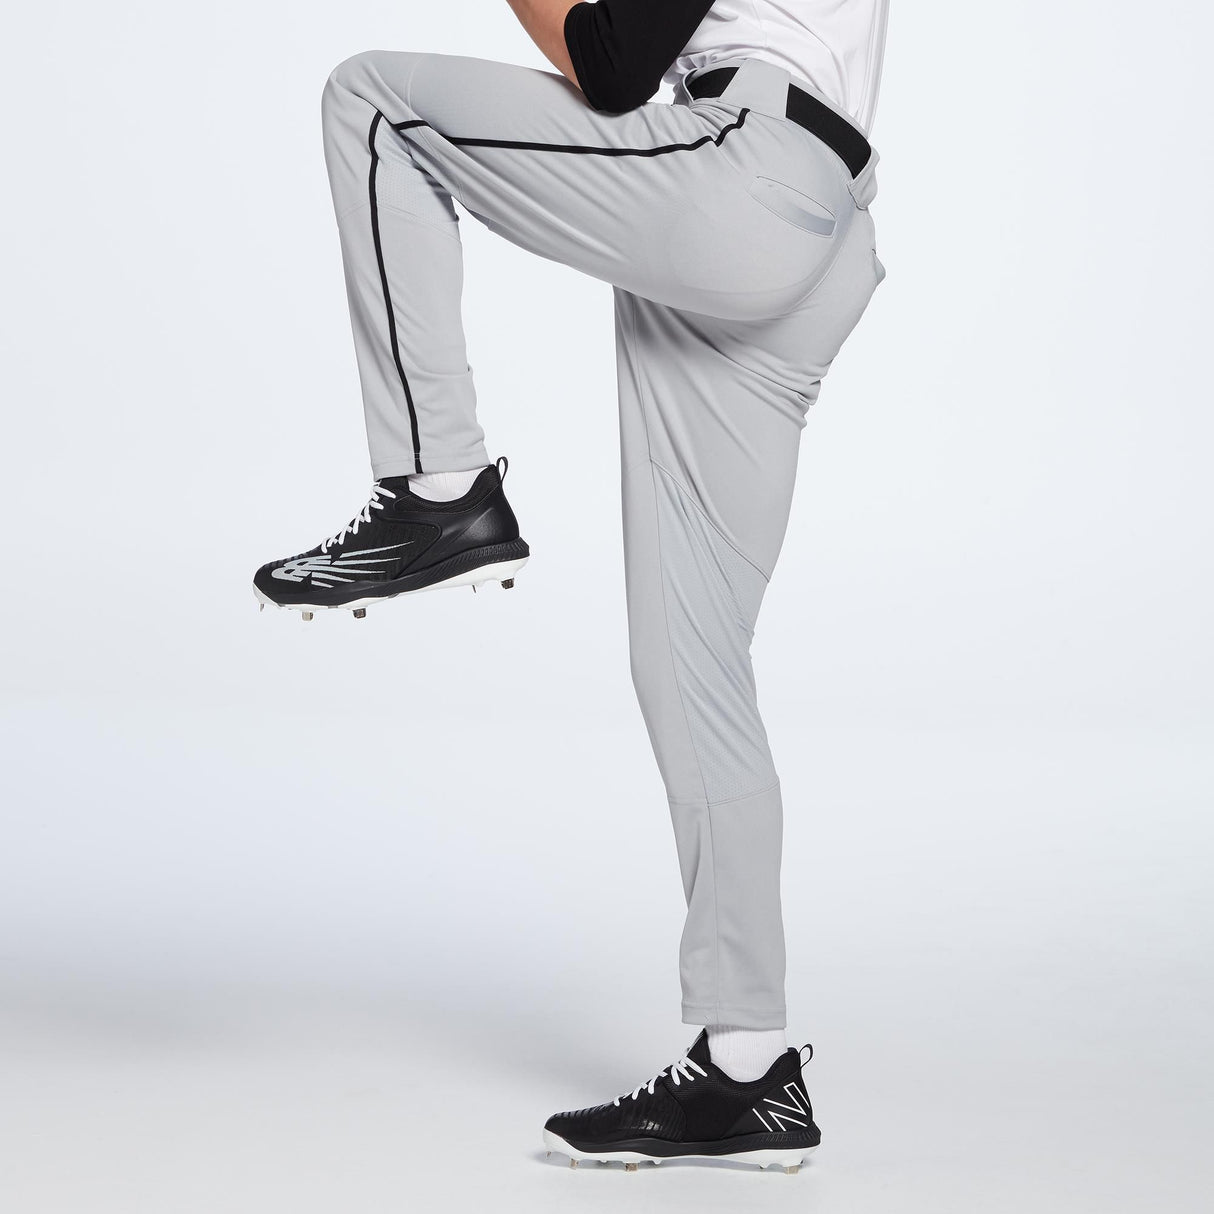 Nike Men's Vapor Select Piped Baseball Pants